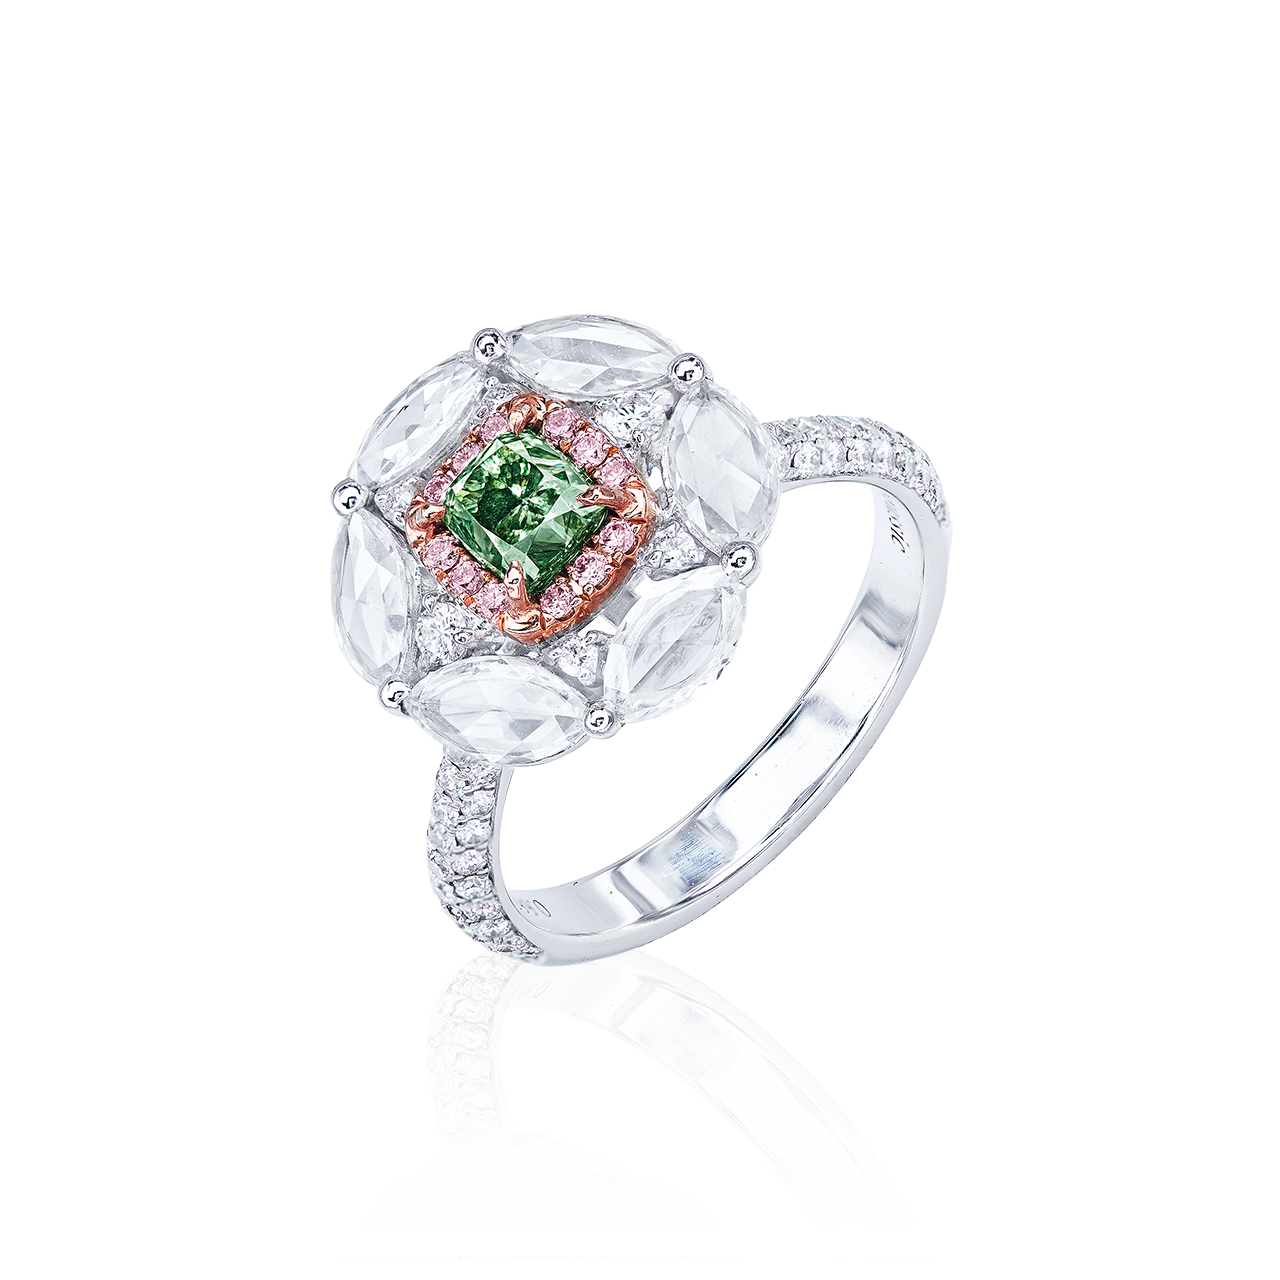 GIA 0.66克拉 深彩綠彩鑽鑽戒
FANCY DEEP GREEN DIAMOND 
AND DIAMOND RING